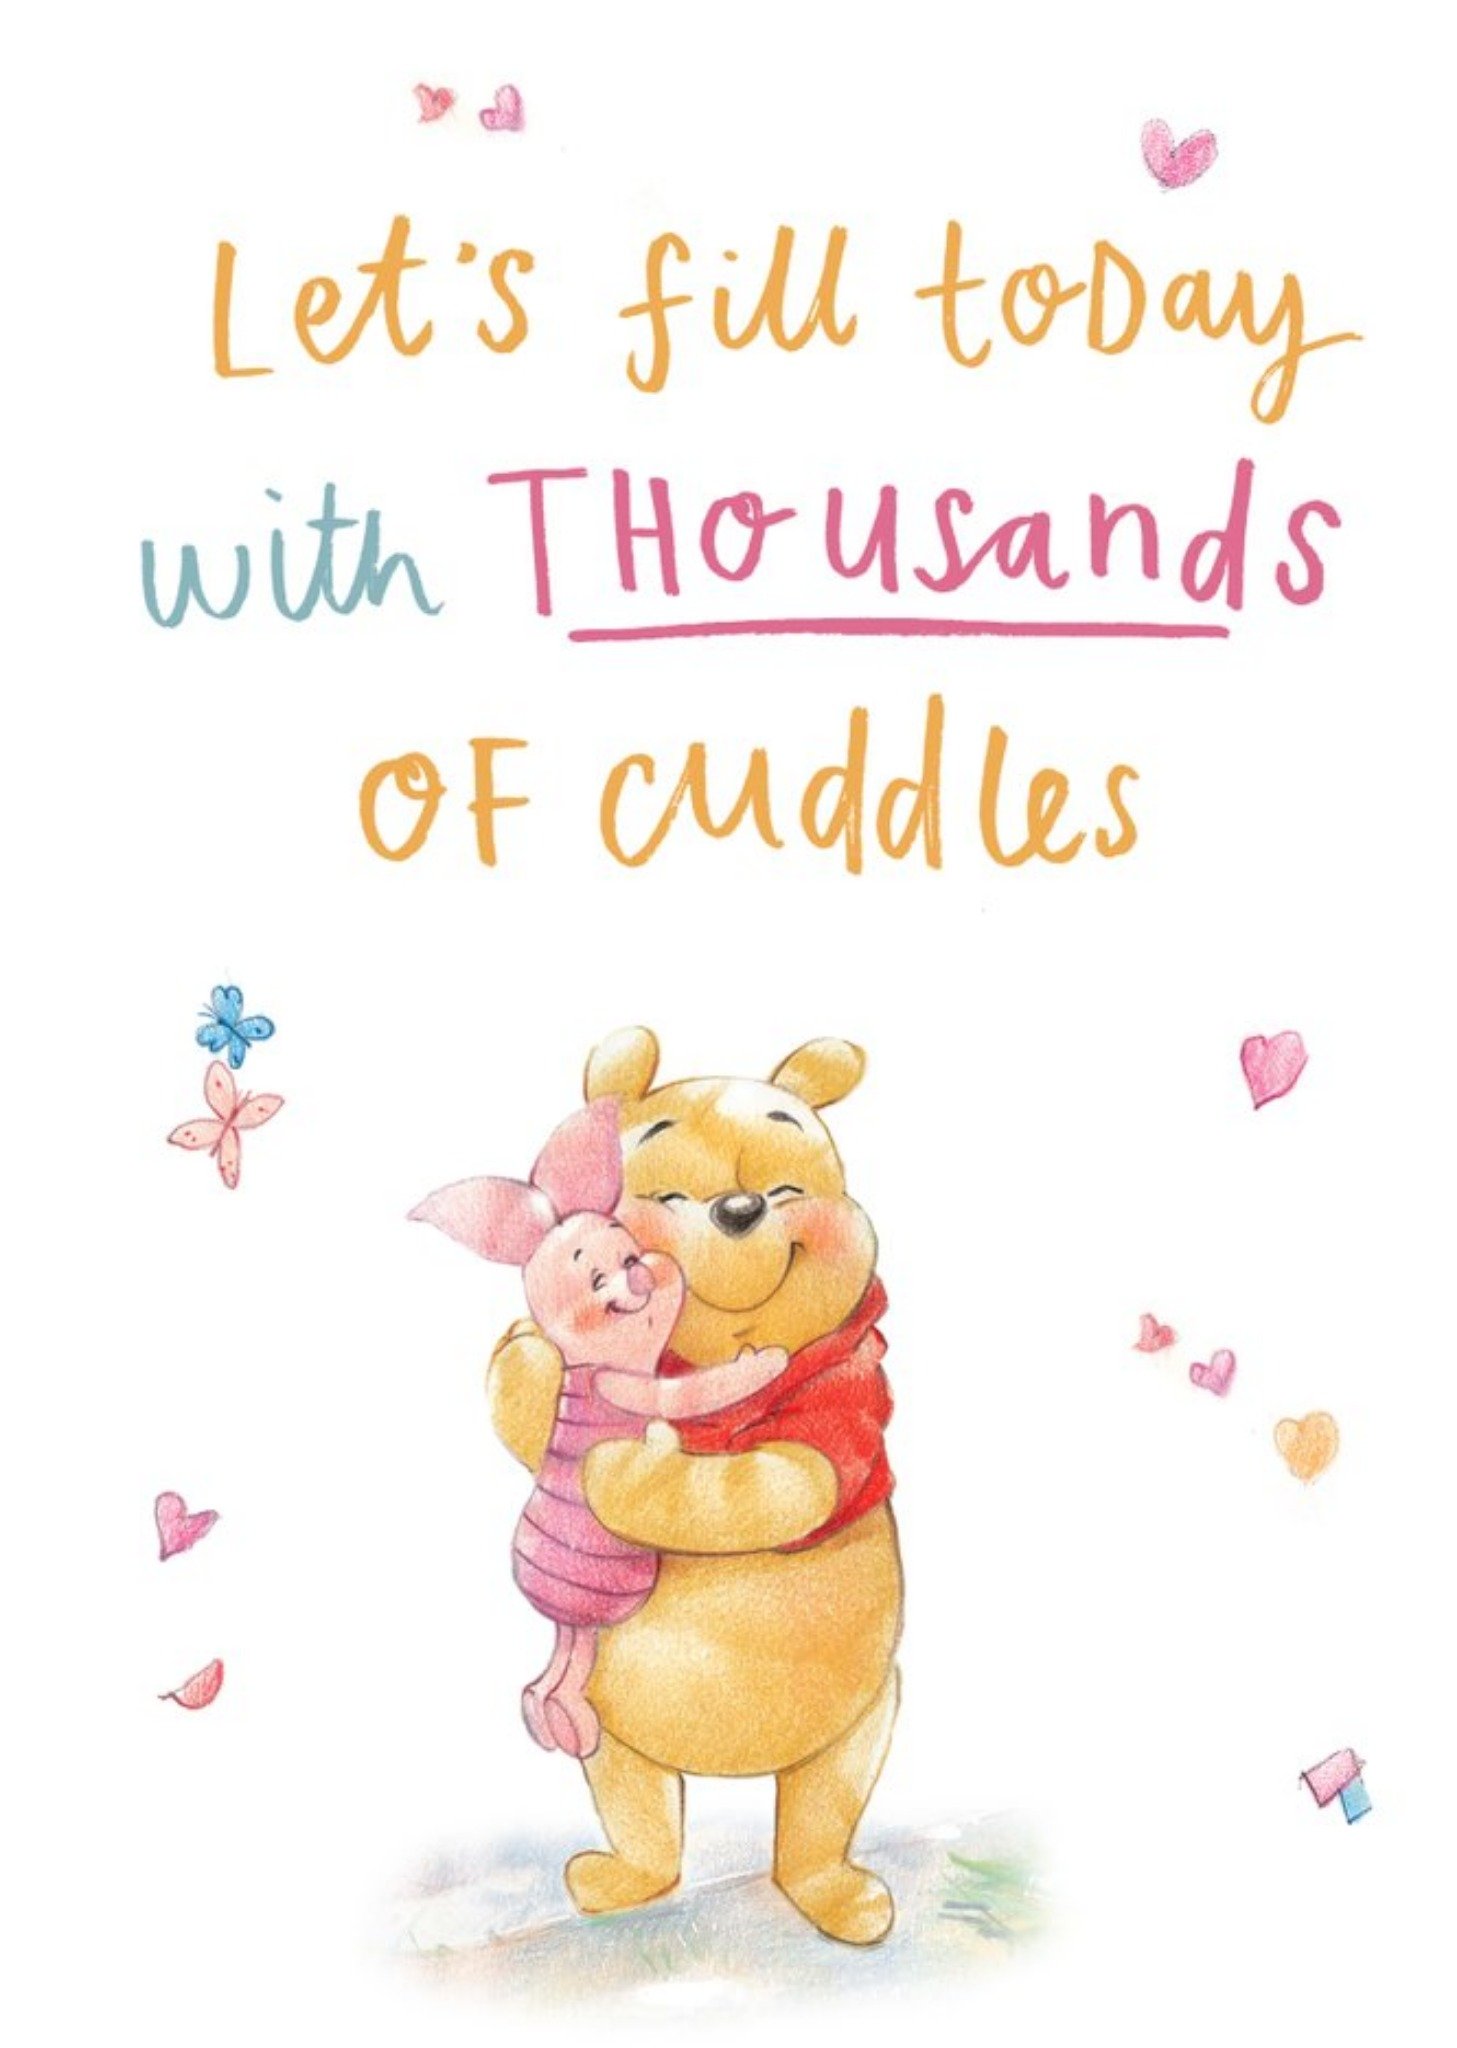 Disney Winnie The Pooh Thousands Of Cuddles Anniversary Card Ecard